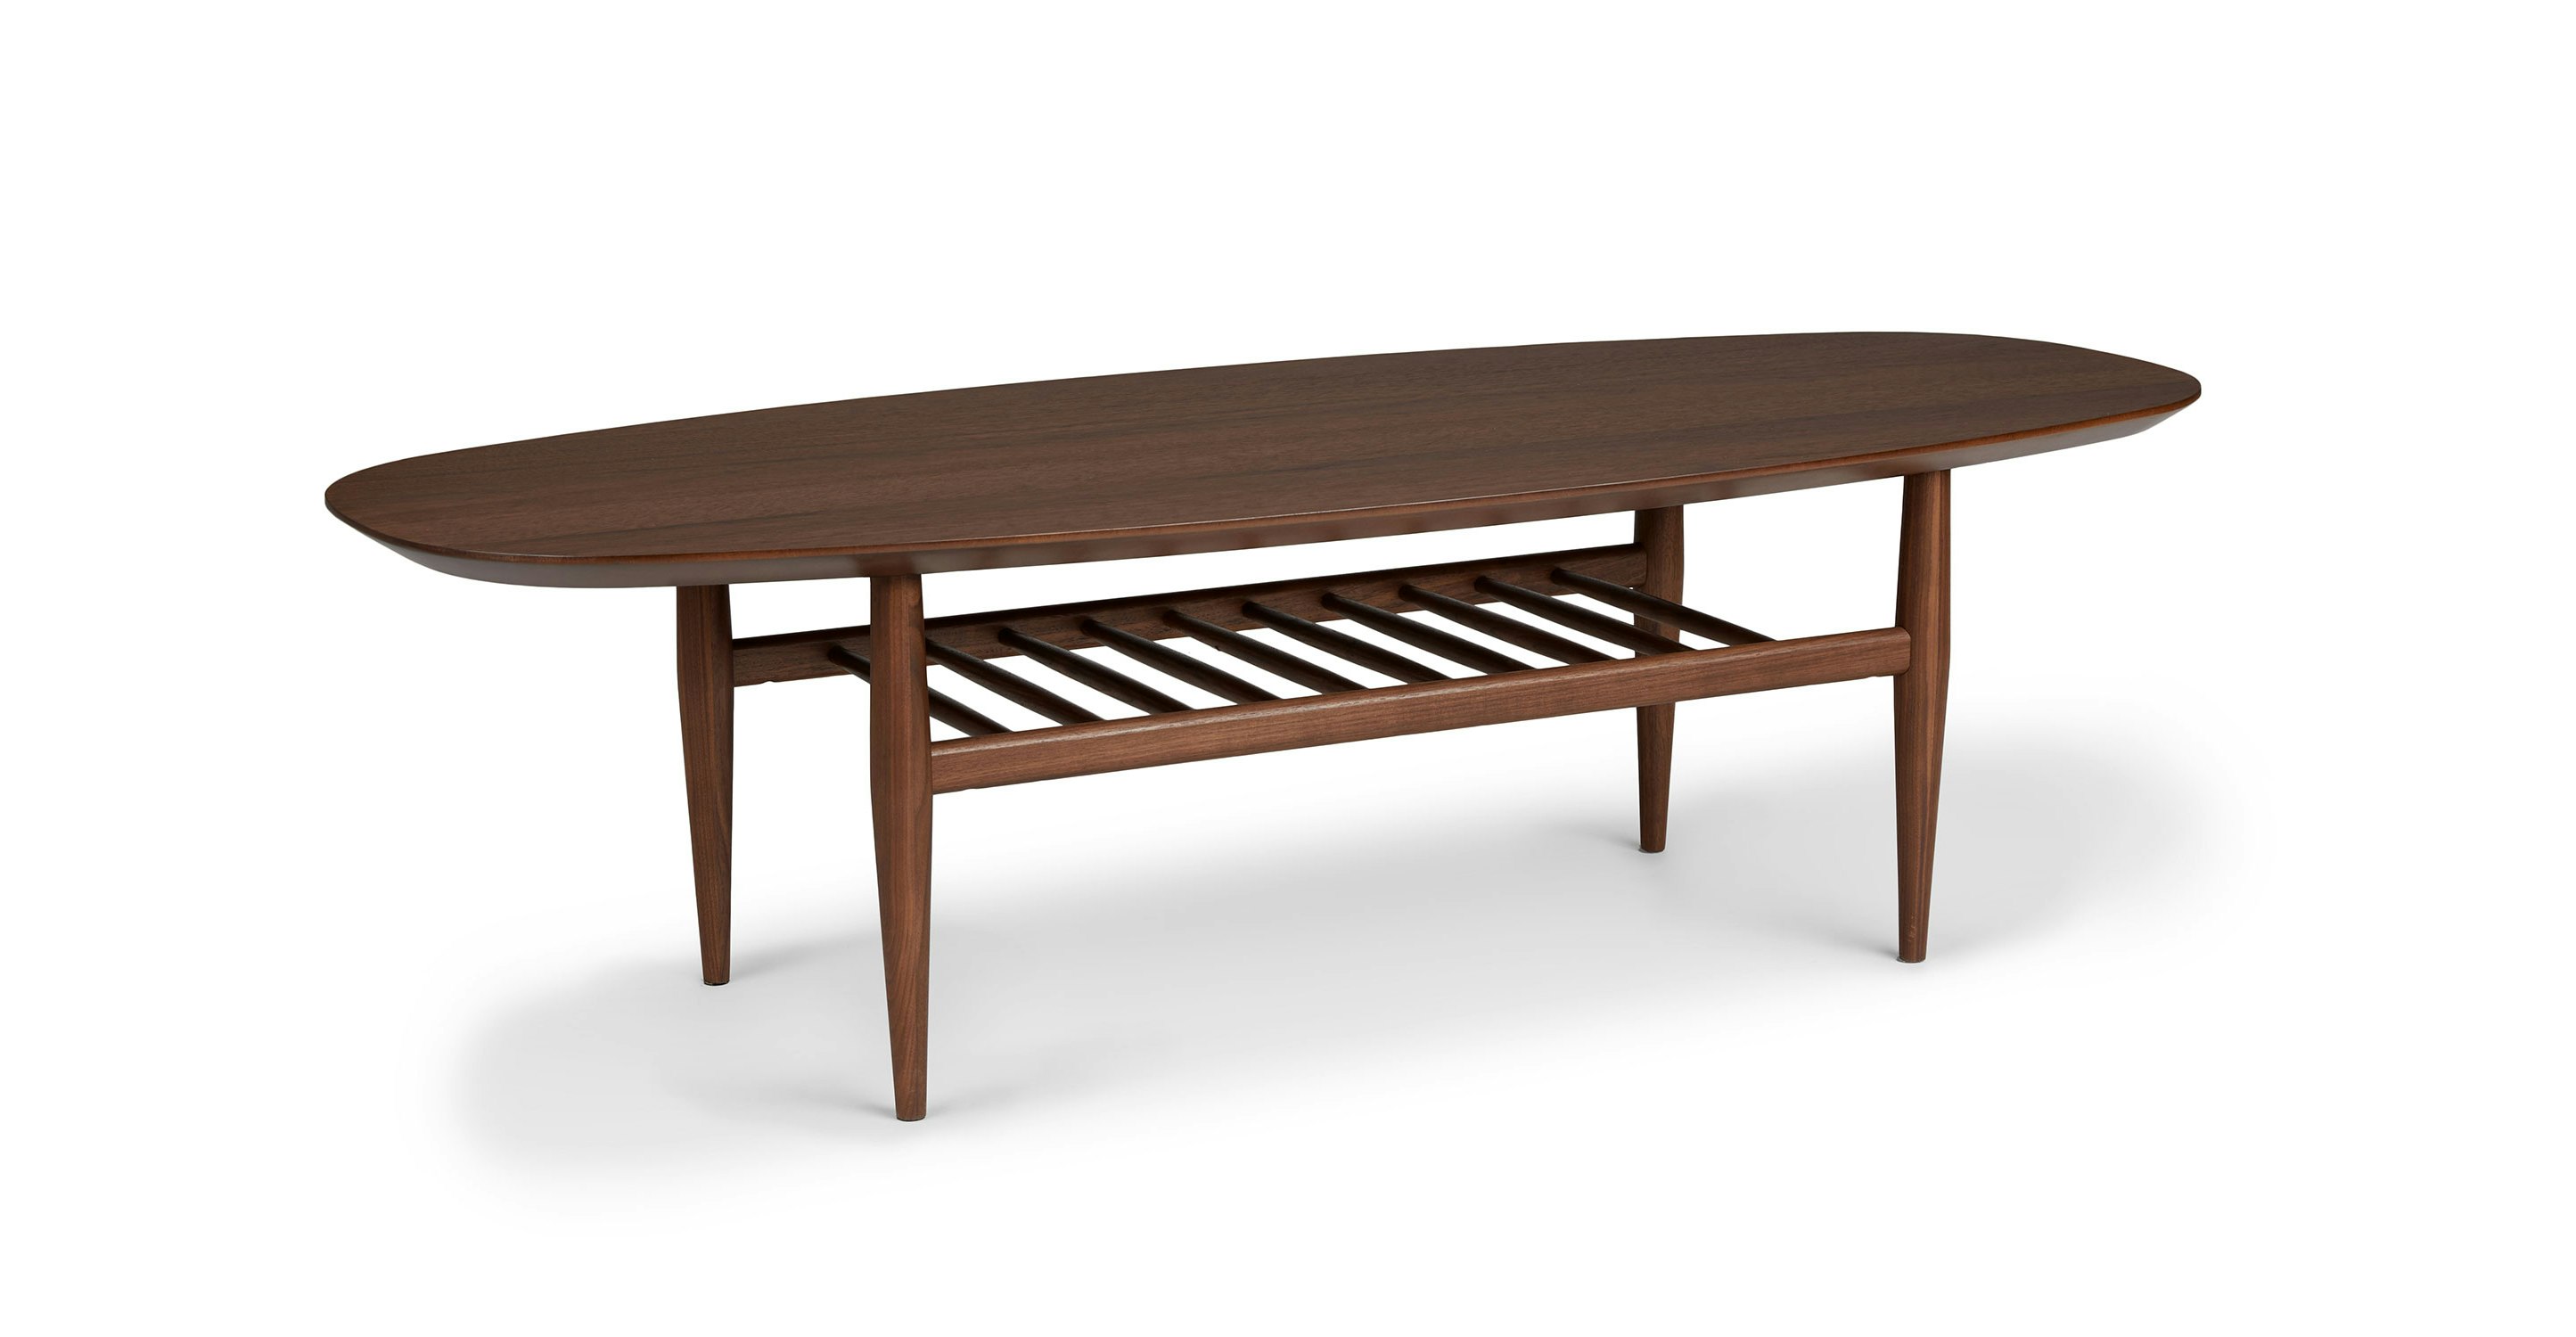 Walnut Coffee Table, 42.5 Wide, Solid Wood | Article Amoeba Modern Furniture